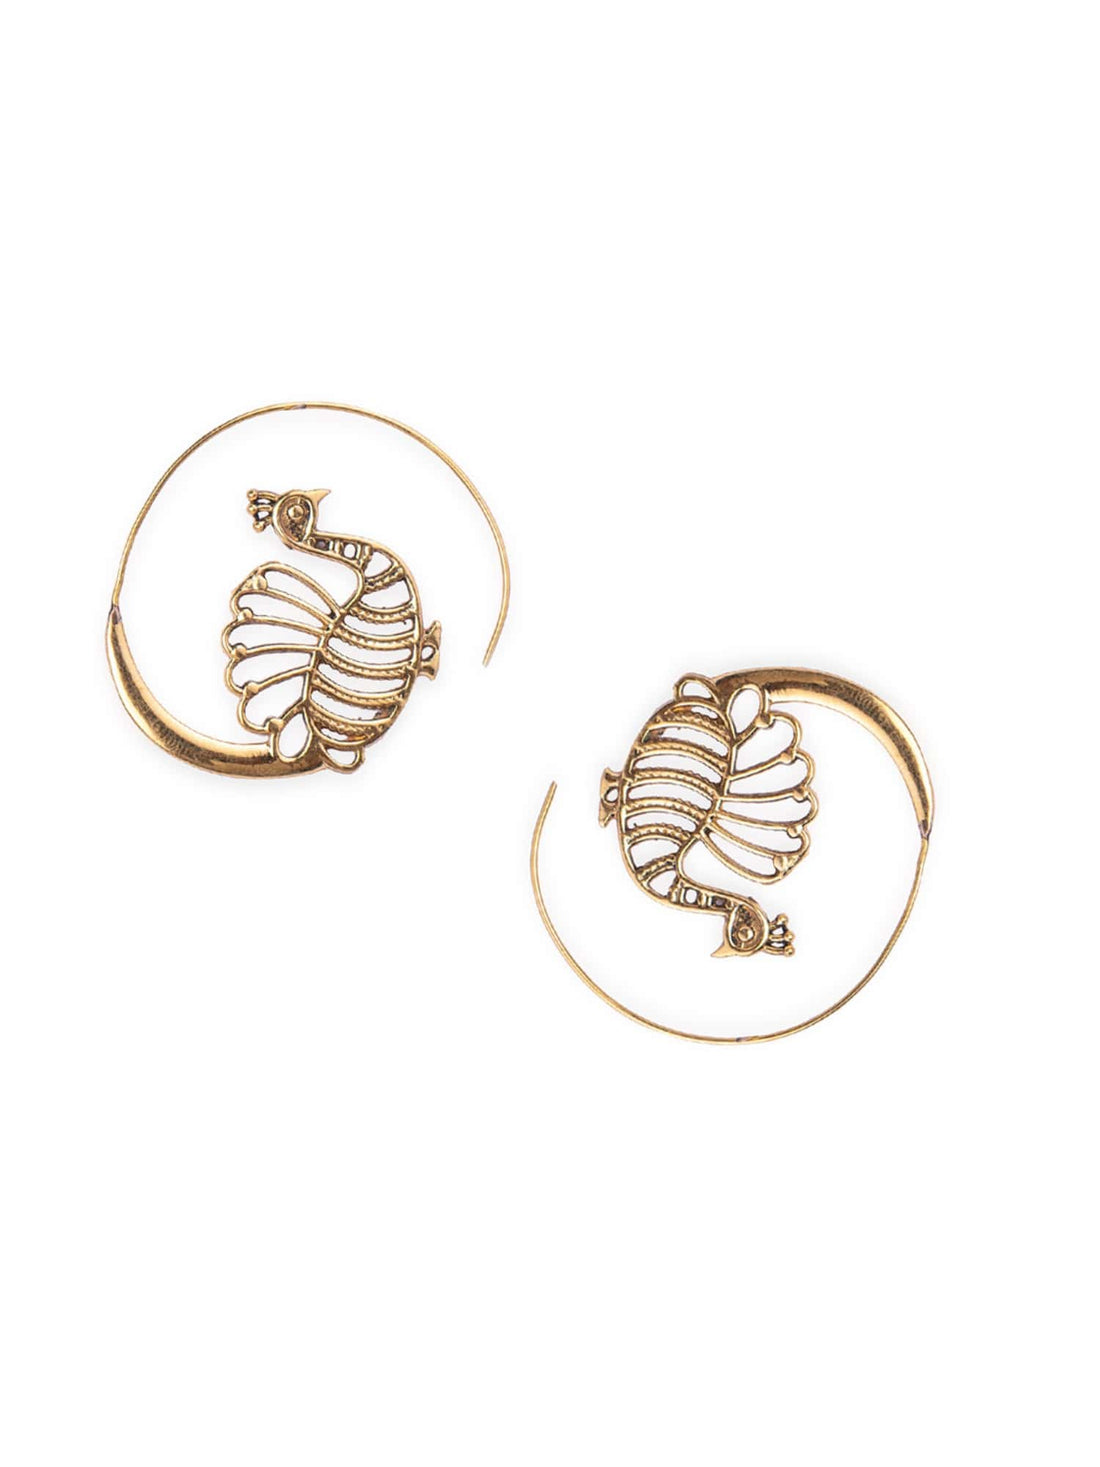 Festive Wear Hoops Earrings - Peacock Pride Gold and Silver-Plated Brass Earrings By Studio One Love